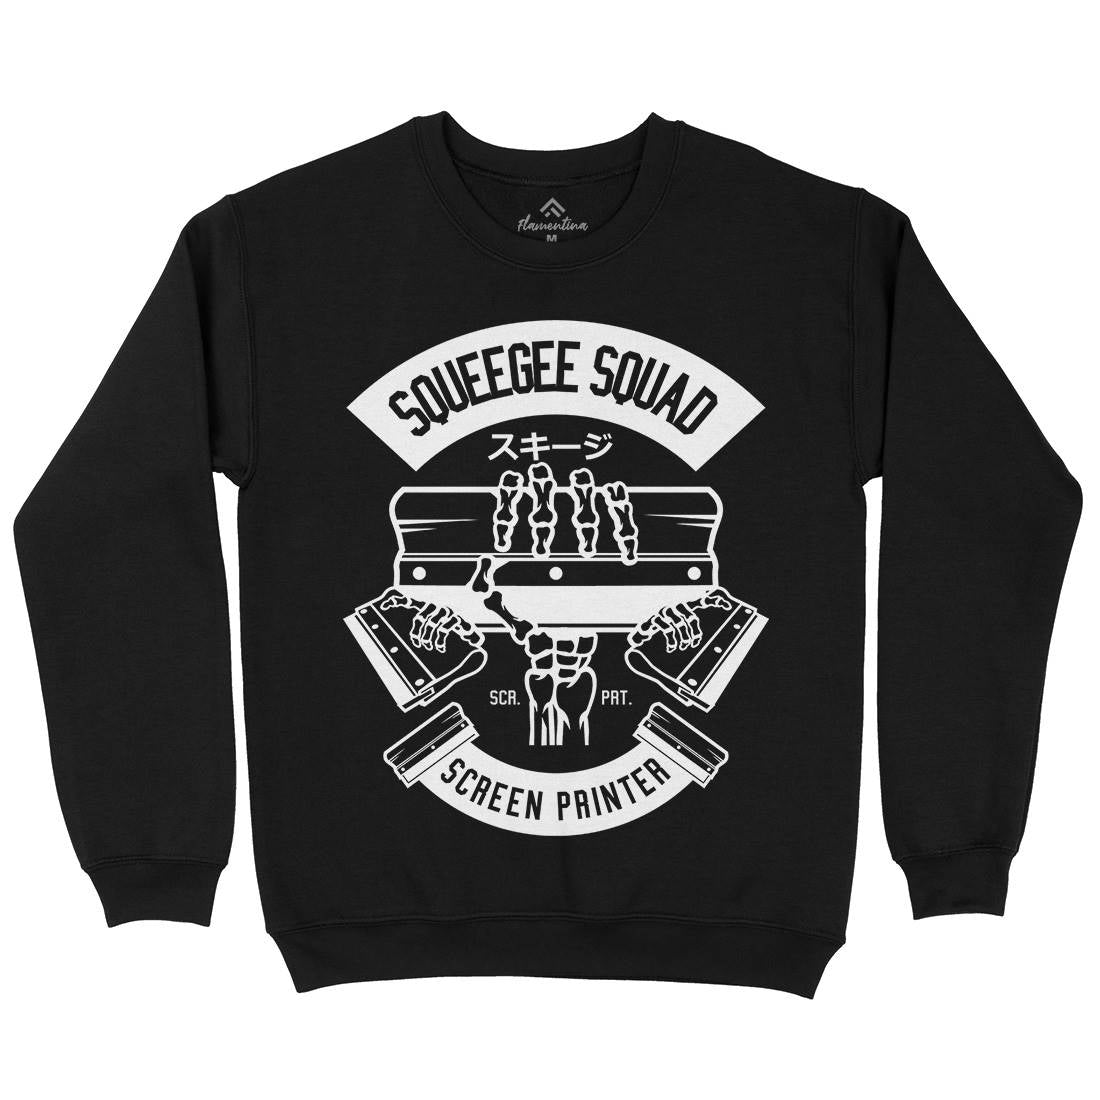 Squeegee Squad Kids Crew Neck Sweatshirt Retro B642